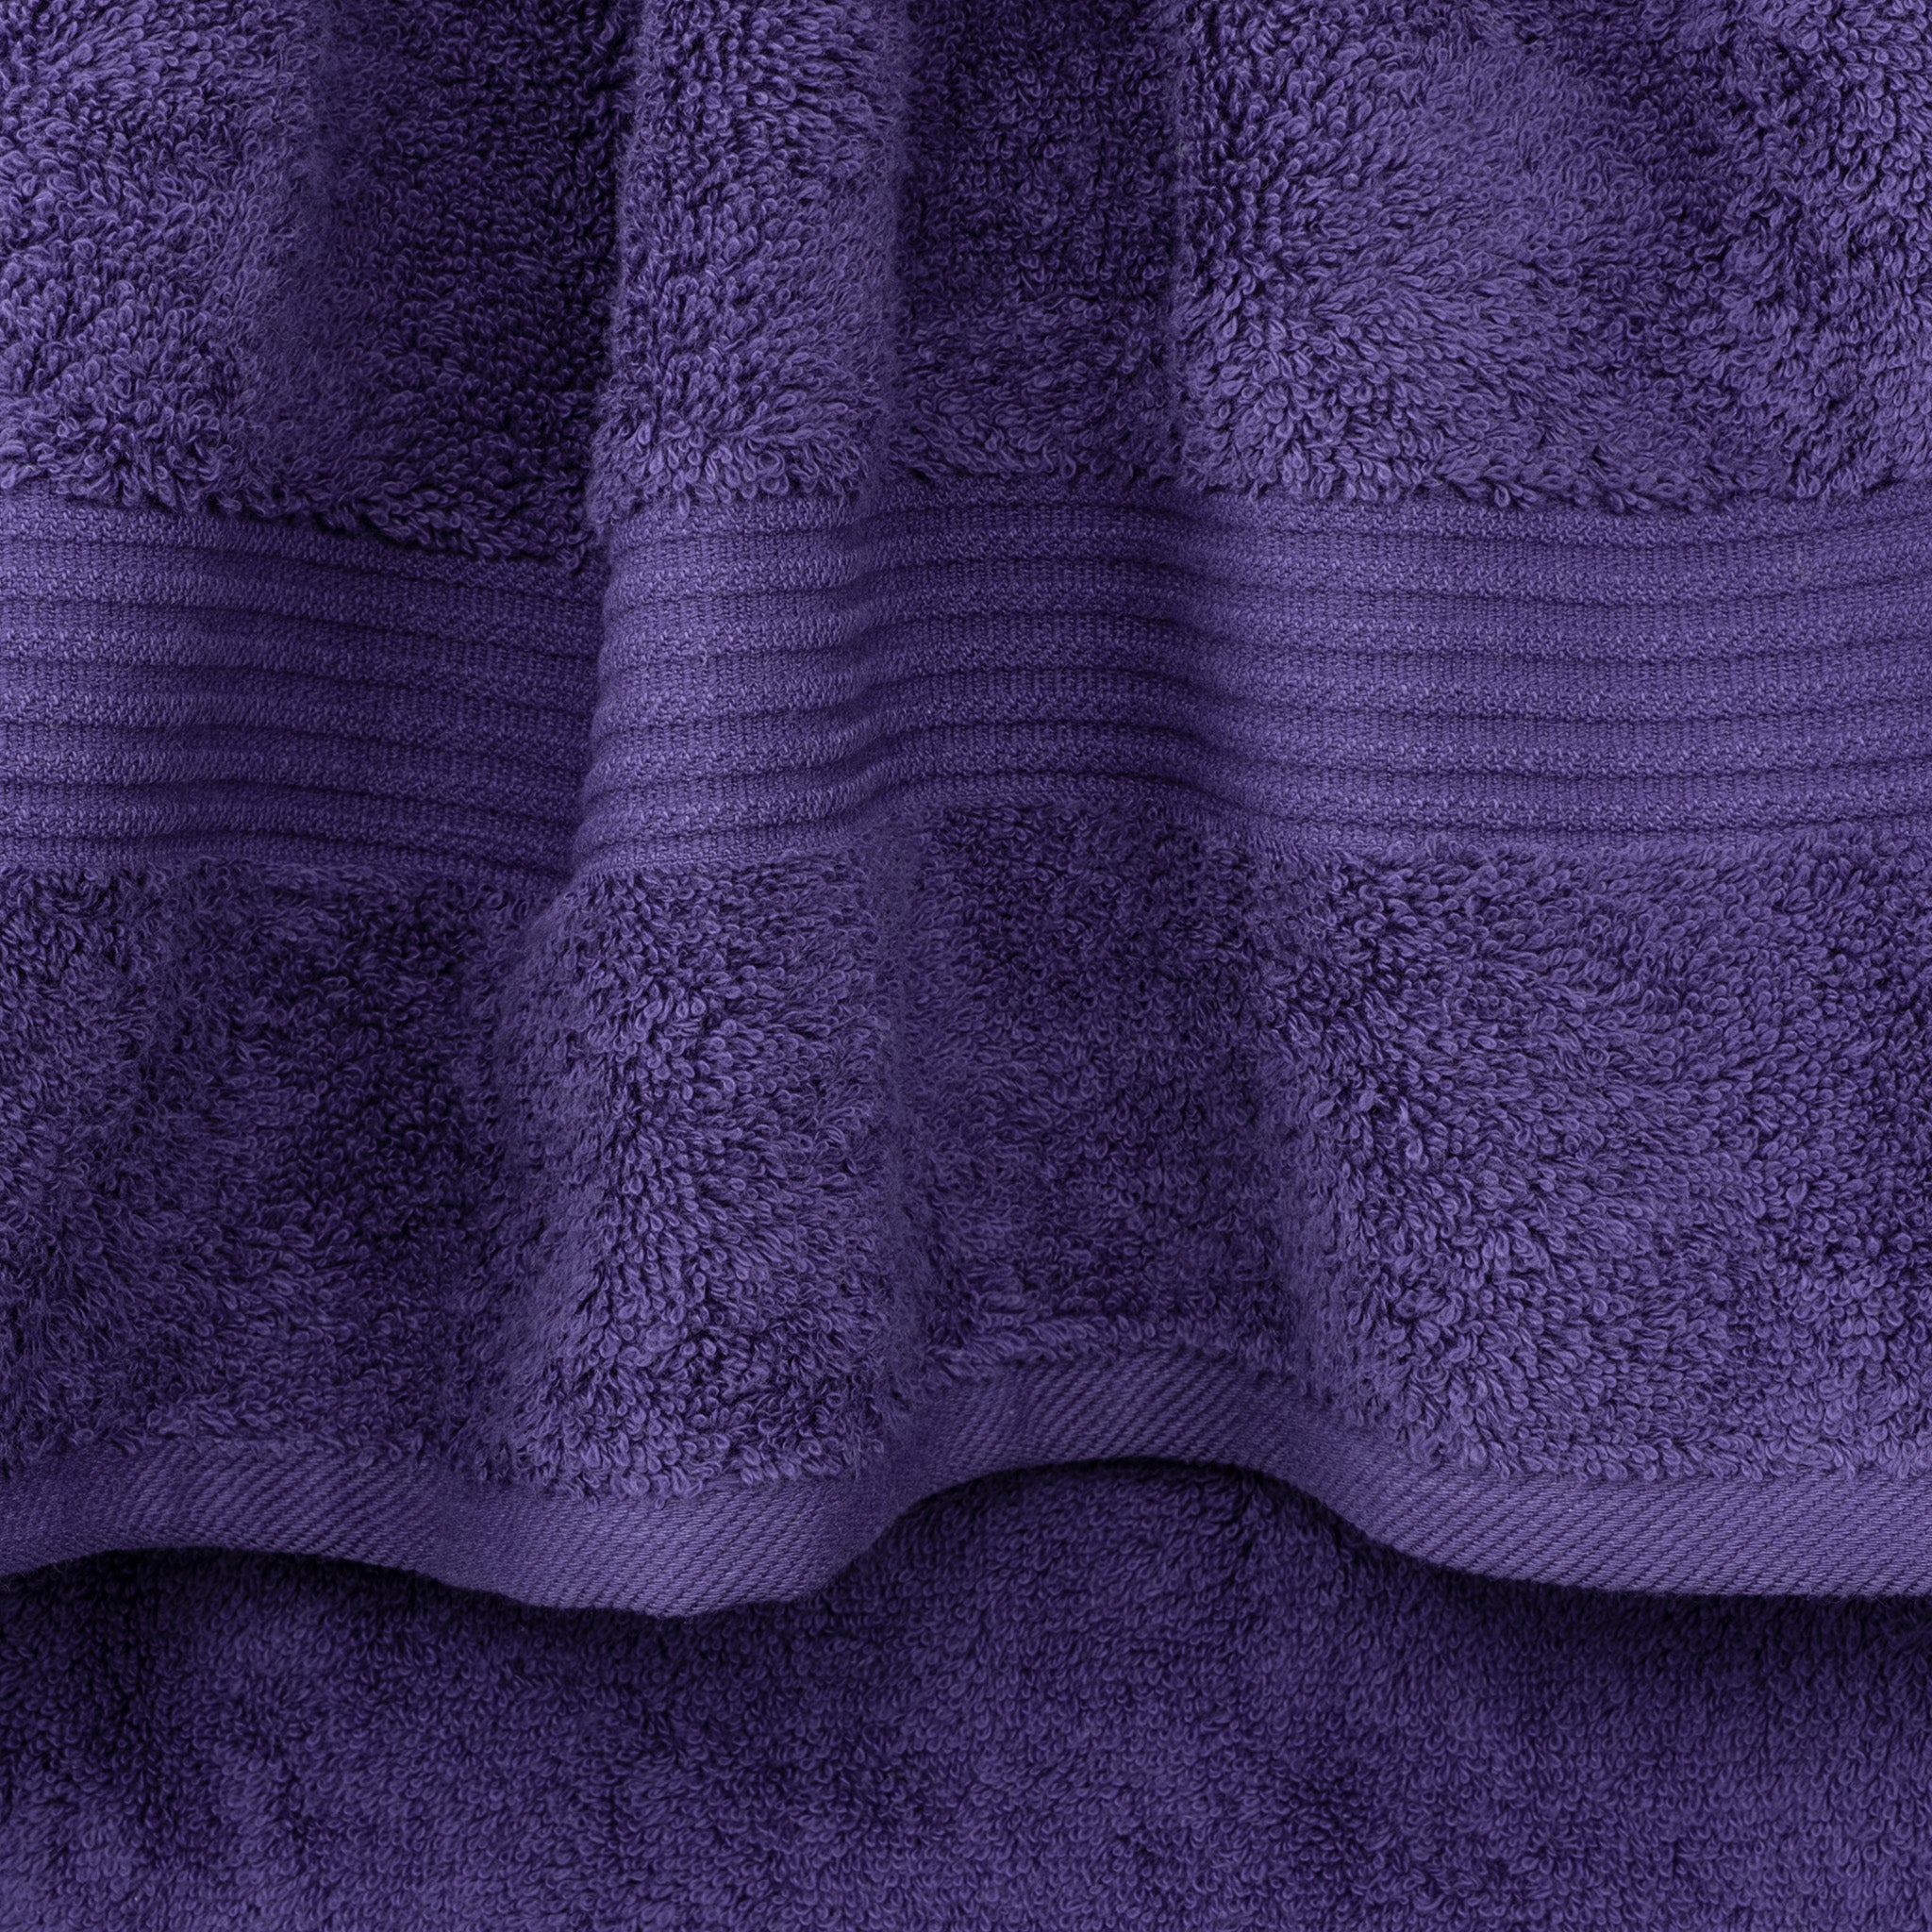 American Soft Linen Bekos 100% Cotton Turkish Towels, 4 Piece Washcloth Towel Set -purple-04